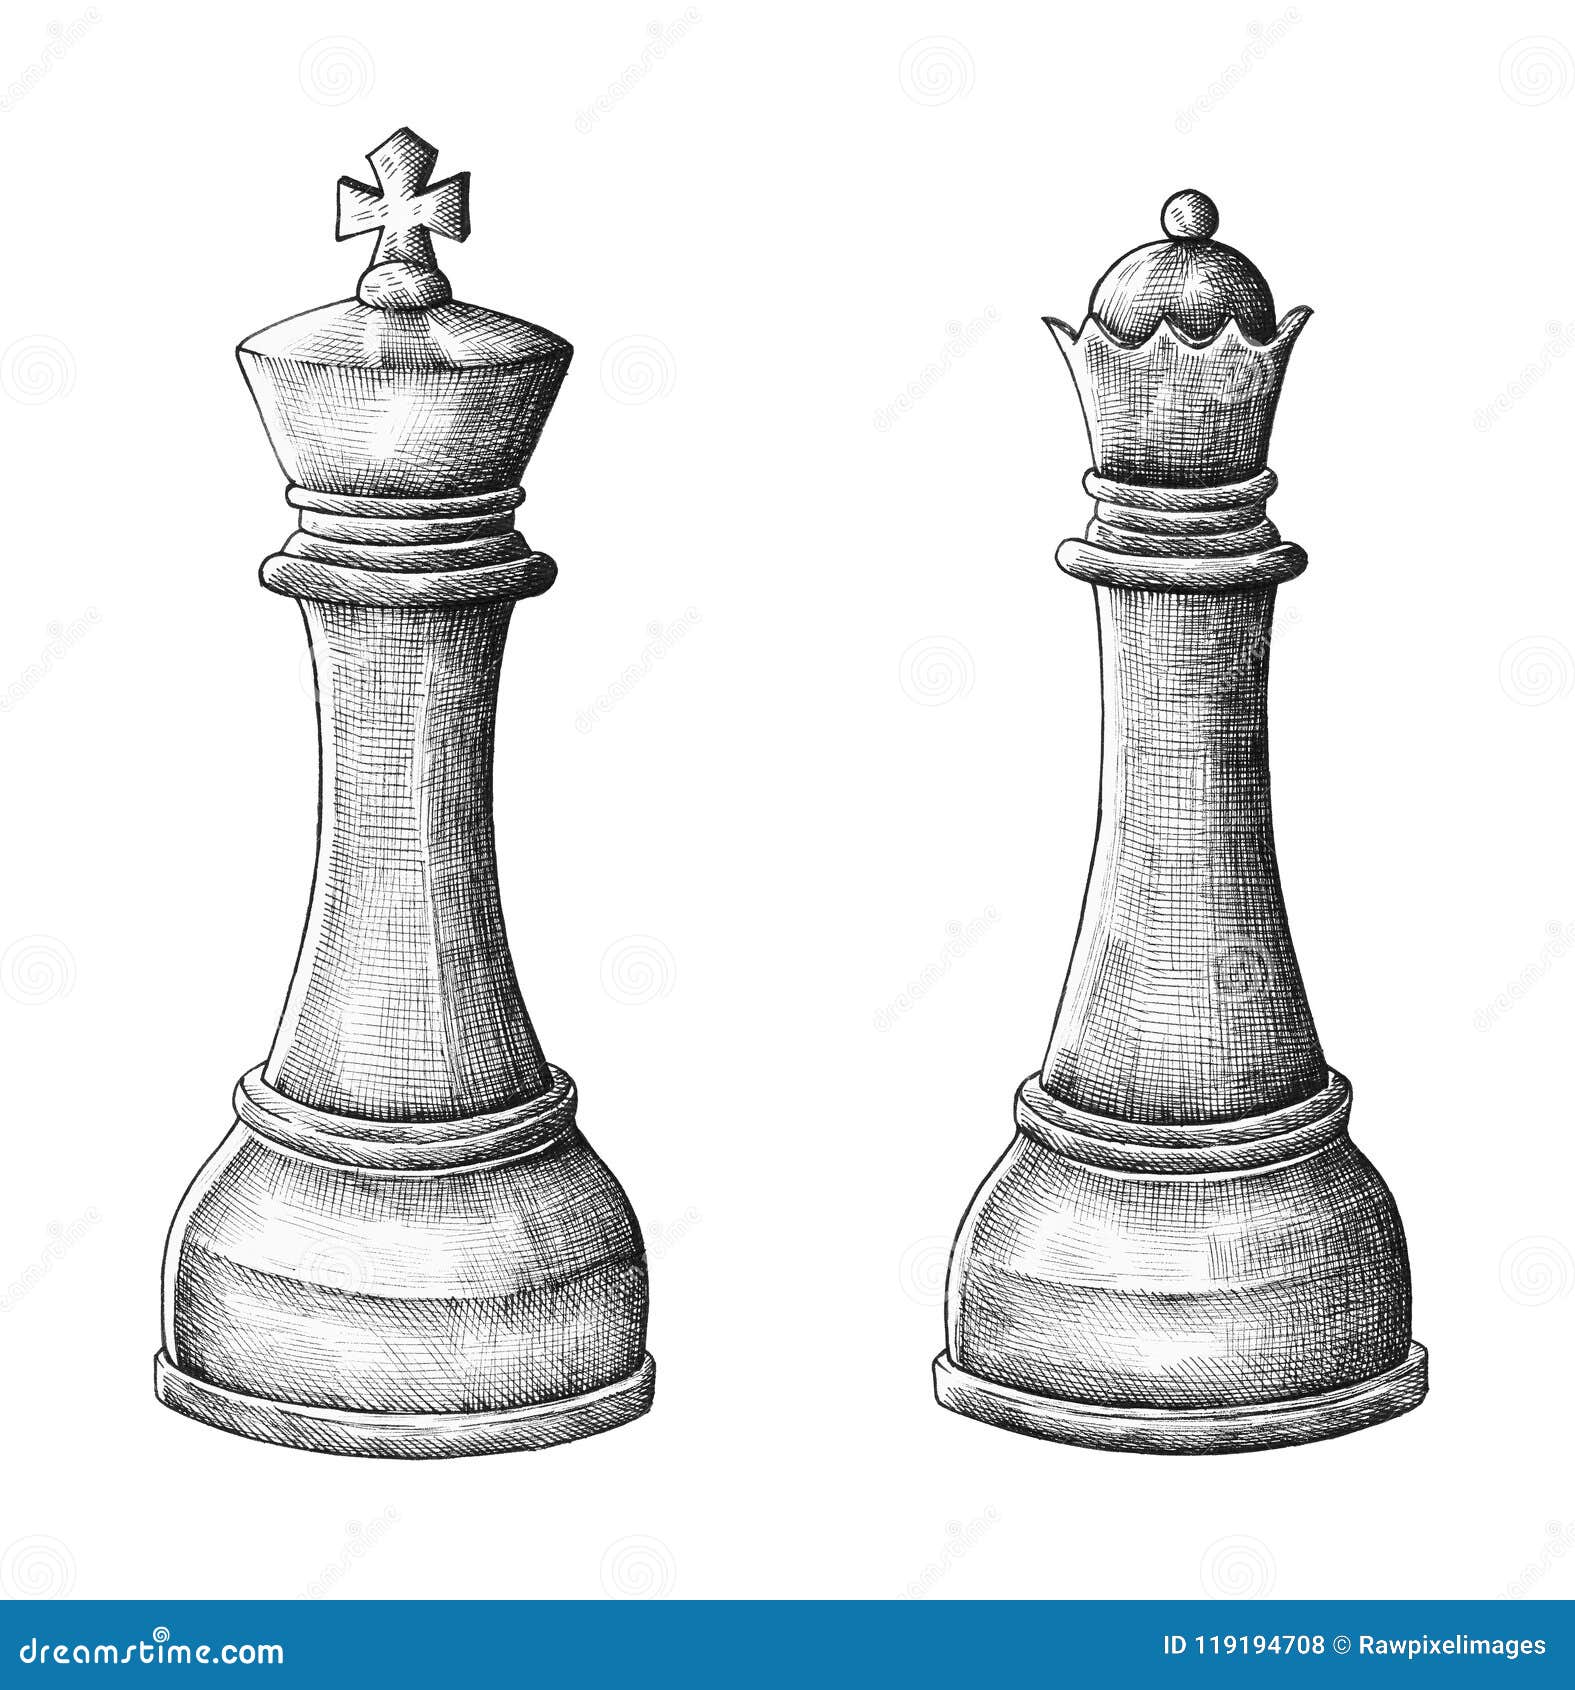 Fotos de Rei rainha xadrez, Imagens de Rei rainha xadrez sem